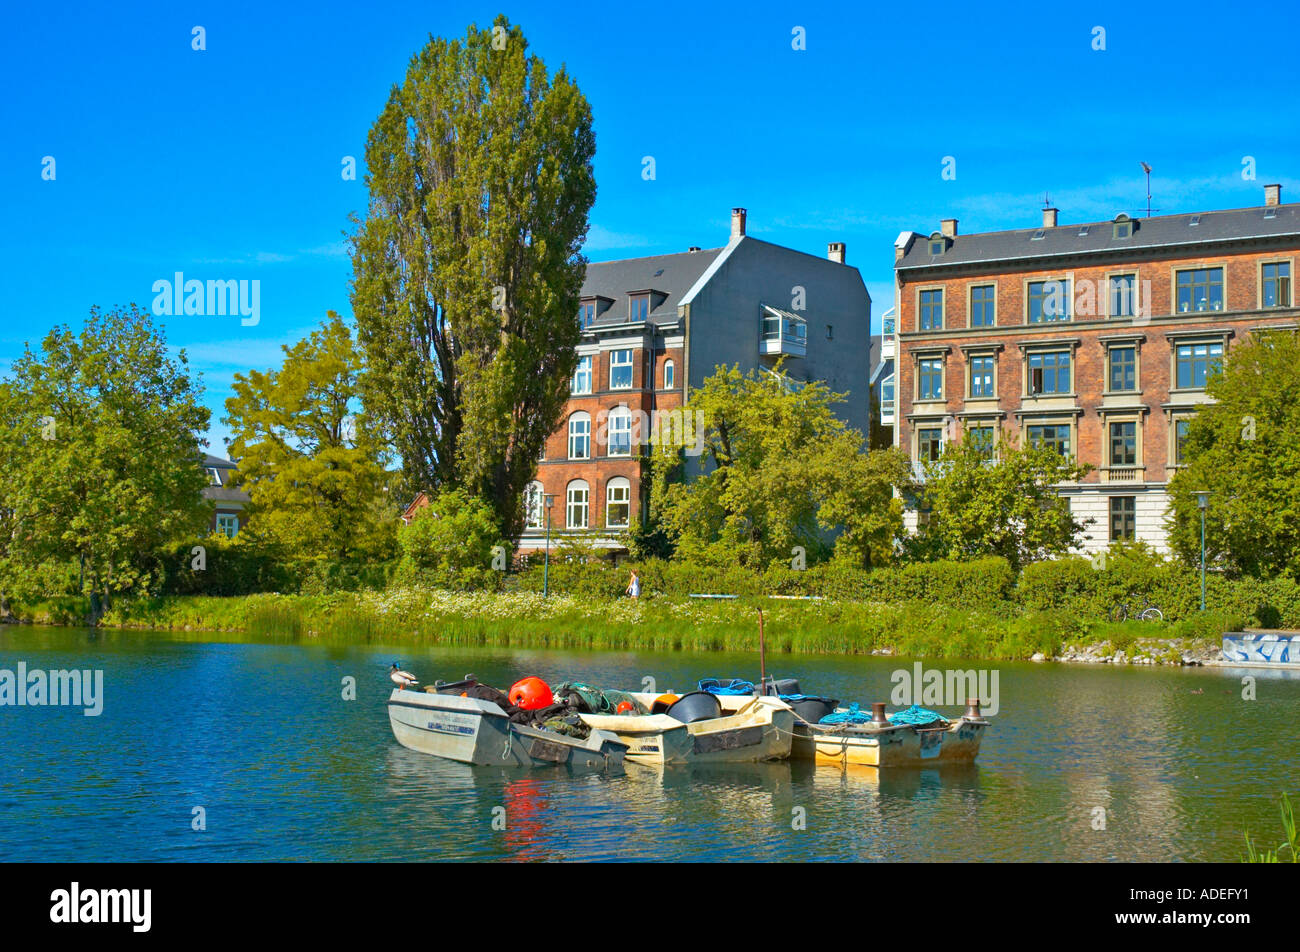 Skt Gotenborg en canal afin de Frederiksberg, à Copenhague Danemark Europe Banque D'Images